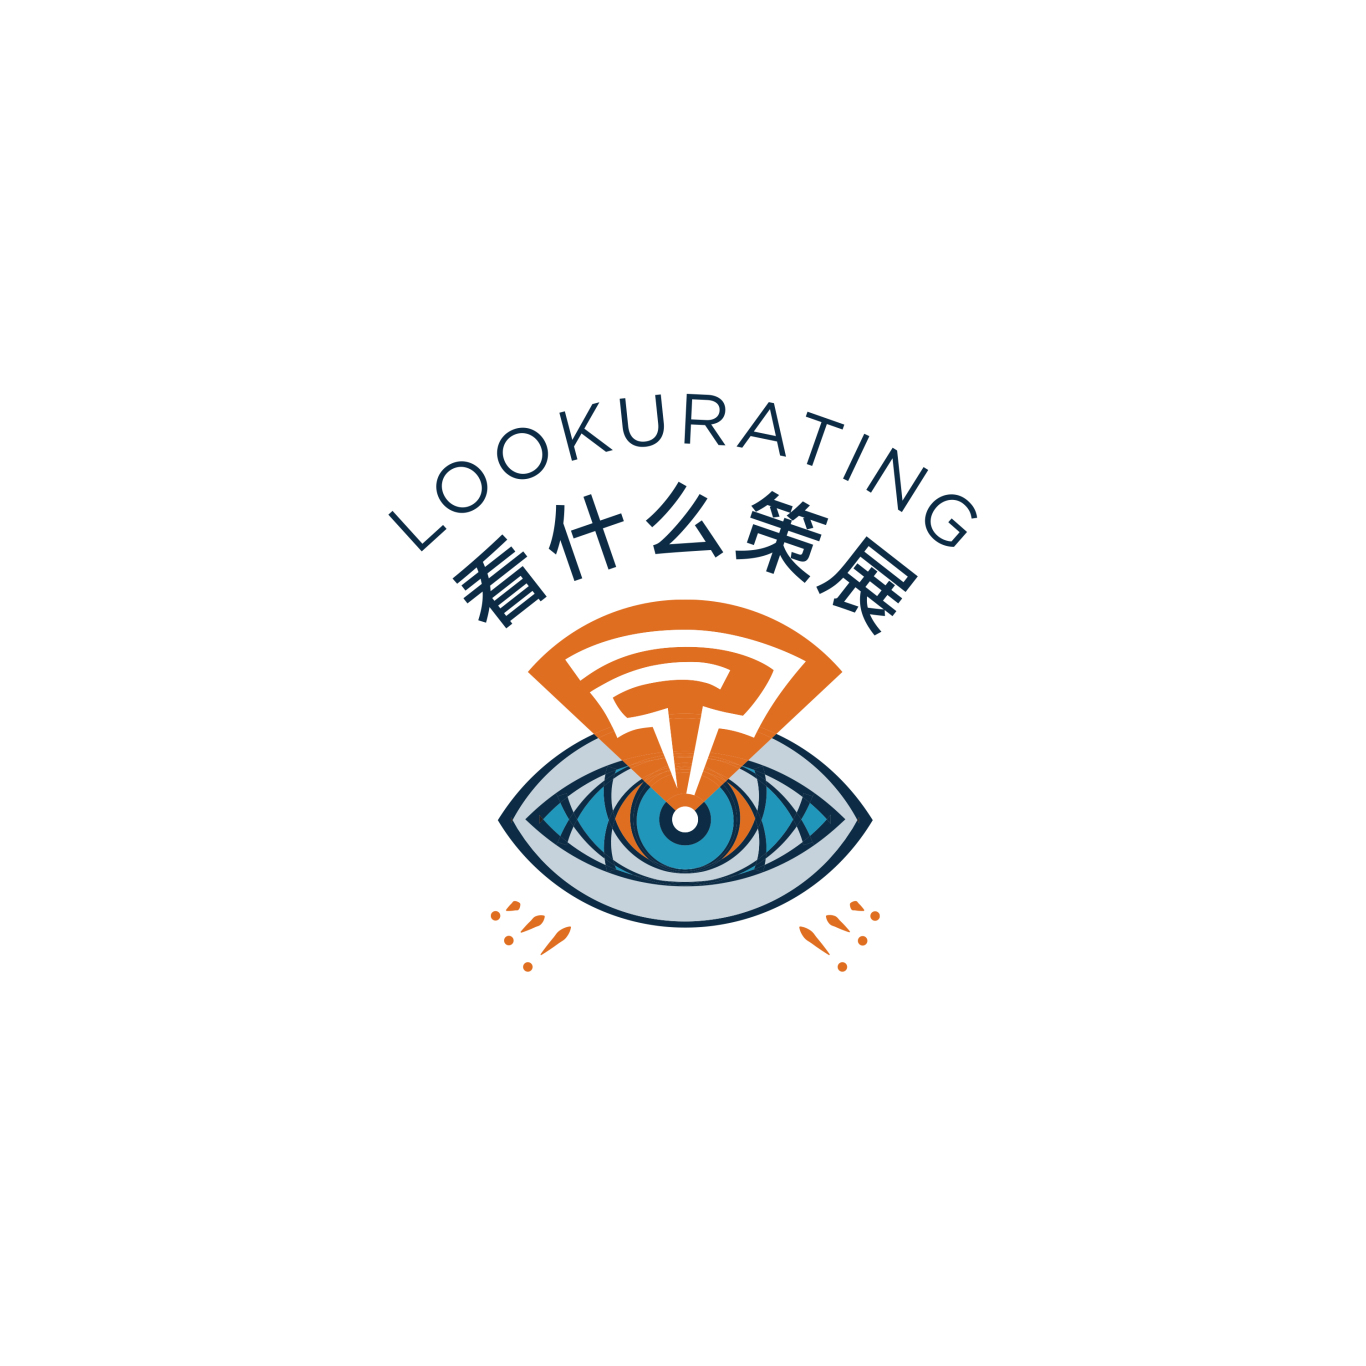 Lookurating看什么策展公司logo设计图1